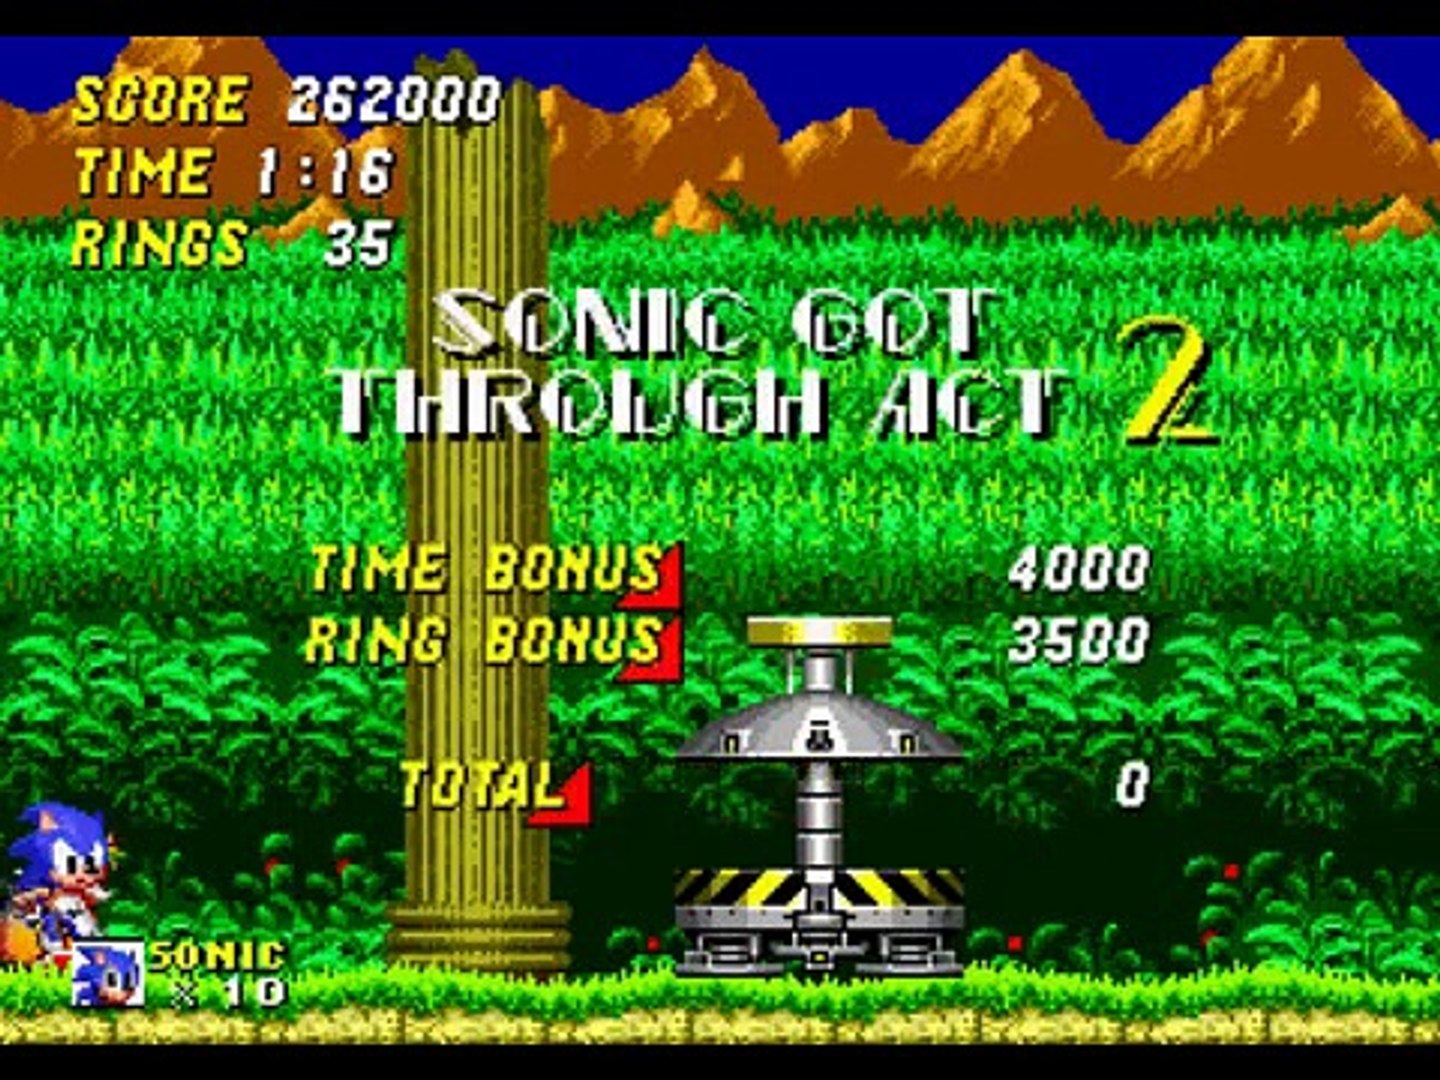 Sonic The Hedgehog 2 (Reprodução) MEGA DRIVE - Play n' Play